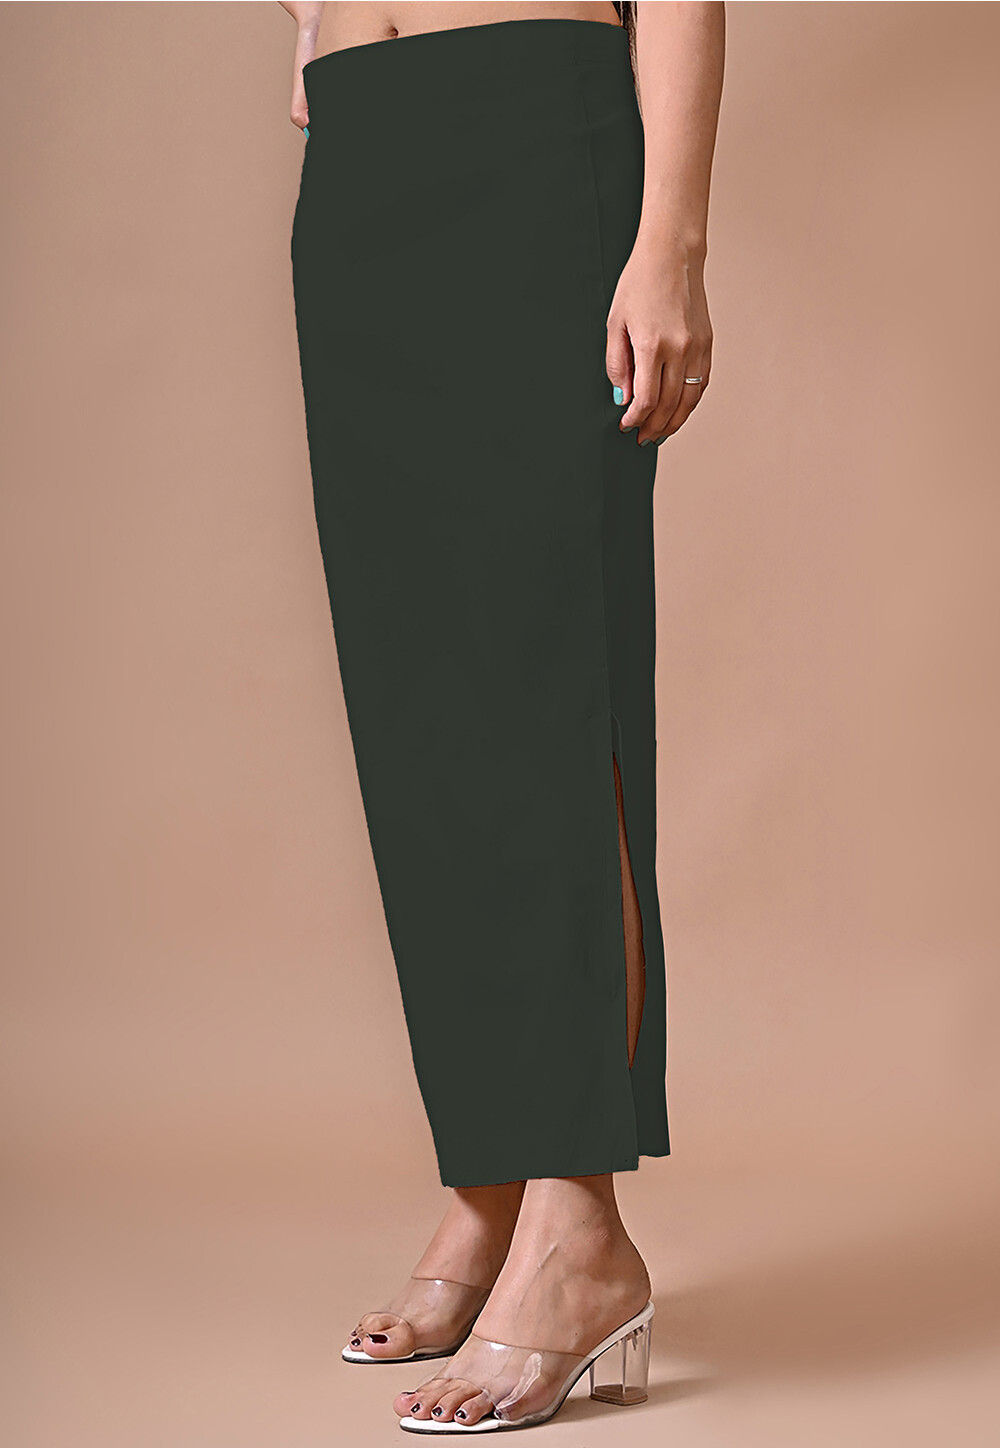 Dark Green Lycra Saree Shapewear Petticoat for Women 